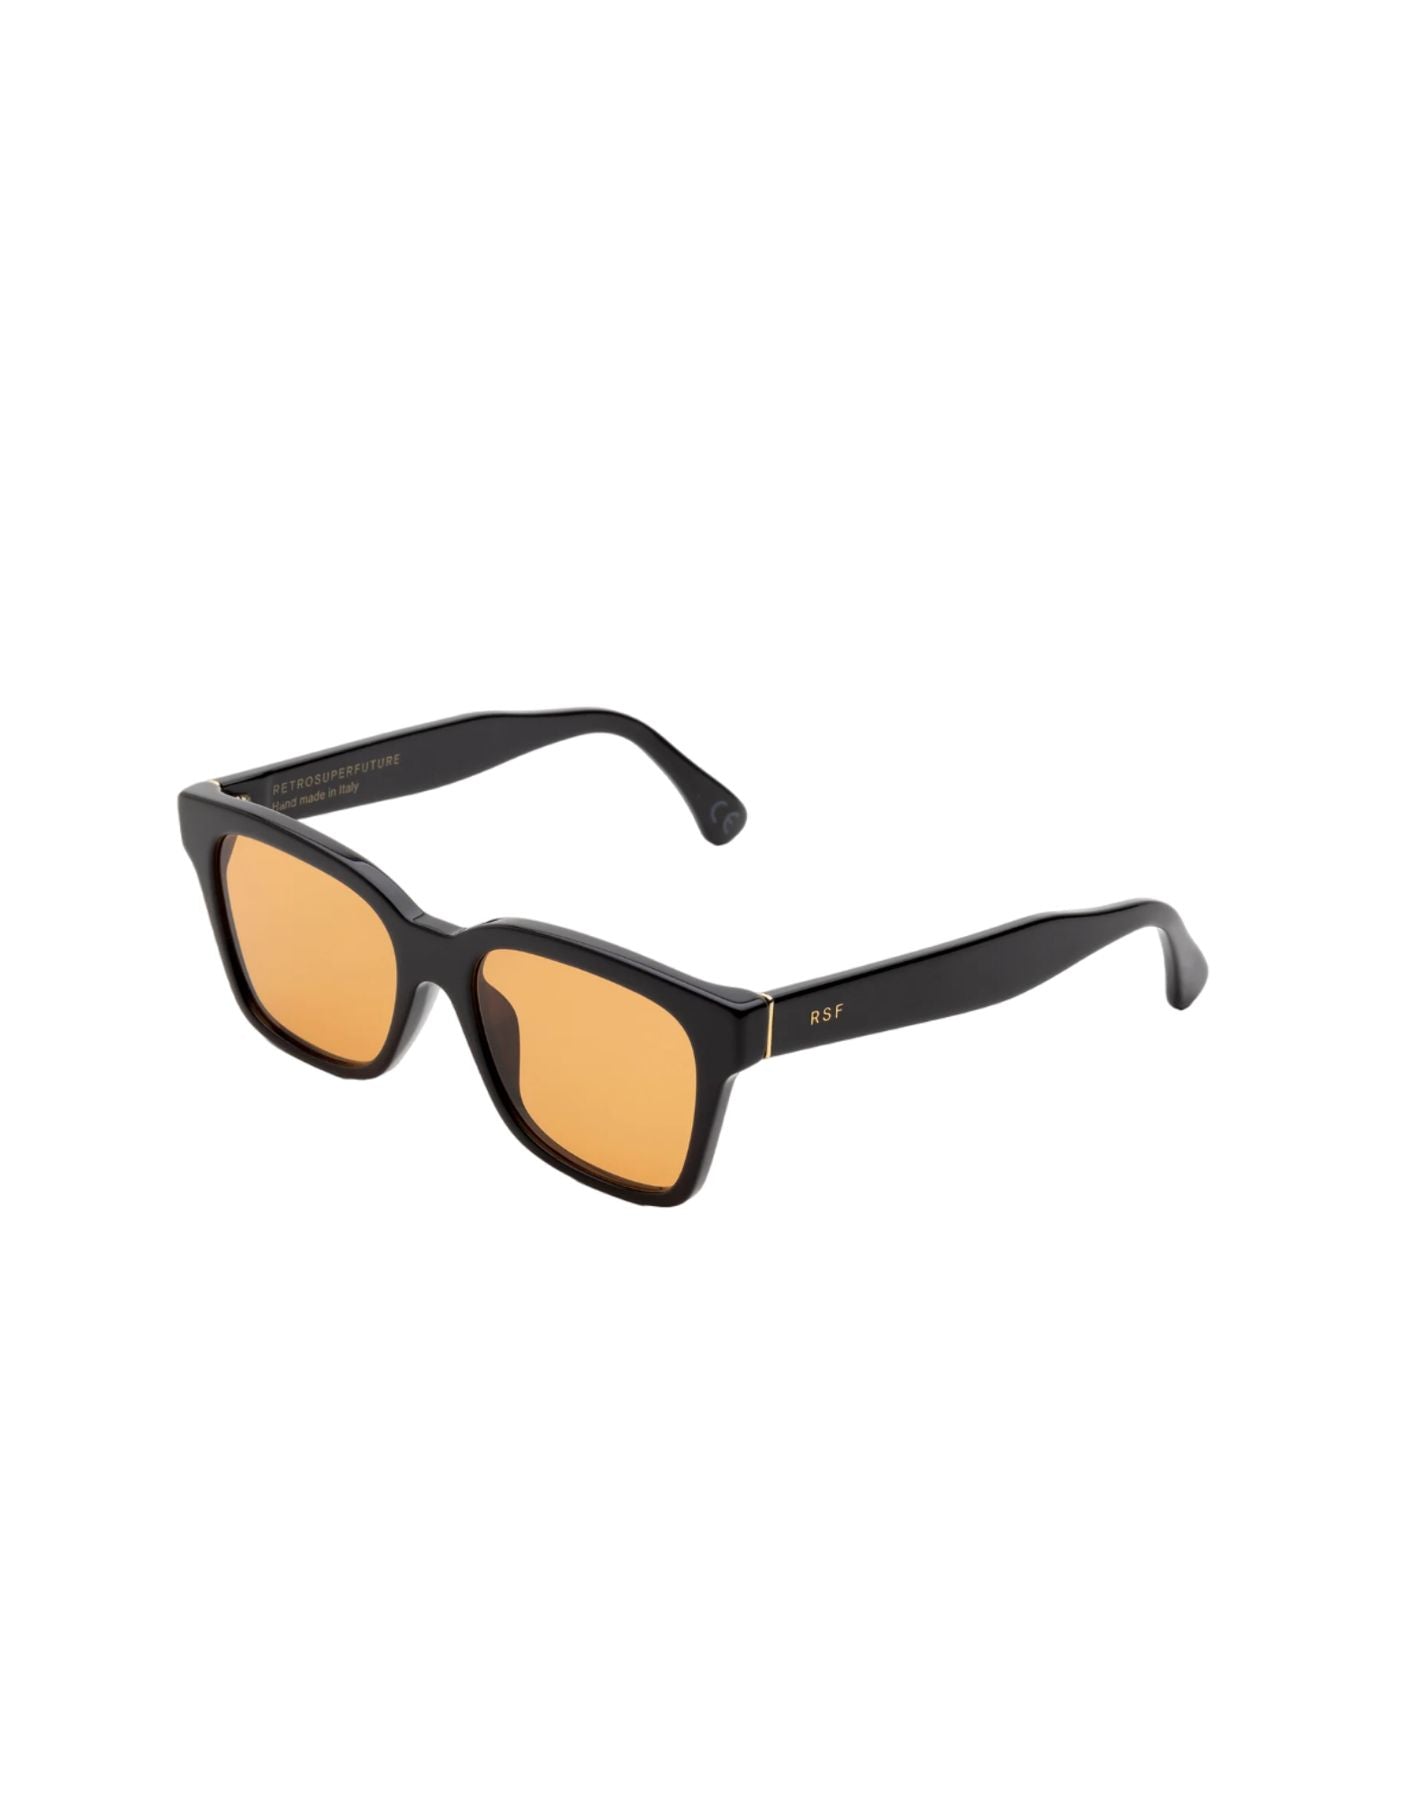 Sunglasses unisex AMERICA REFINED 9I2 Retrosuperfuture